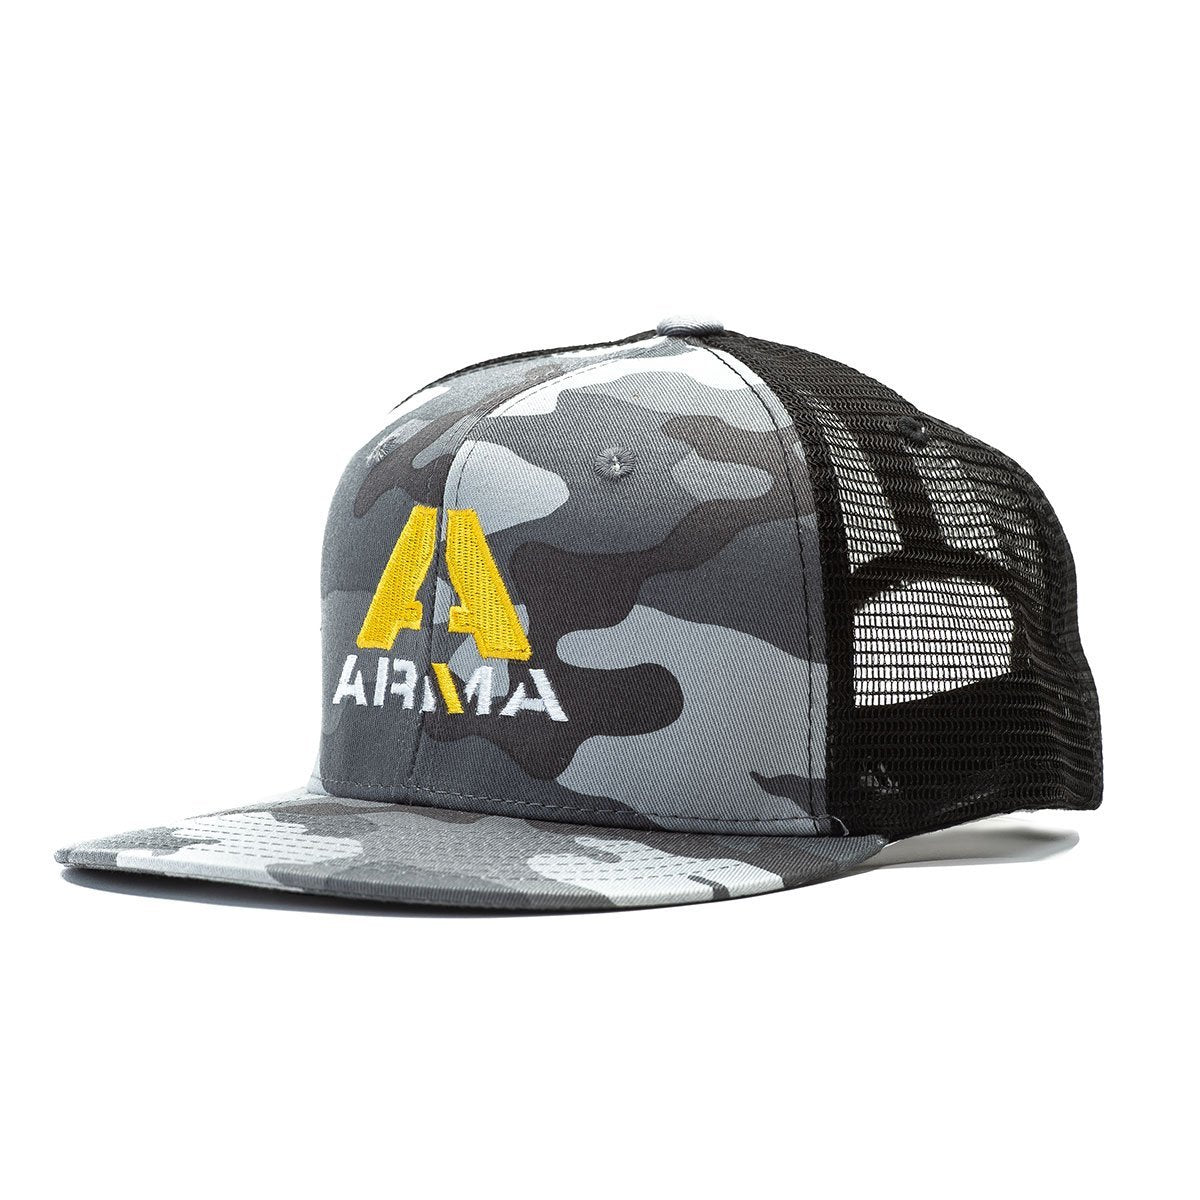 ARMA Stacked Hat (Urban Camo) - Arma Sport